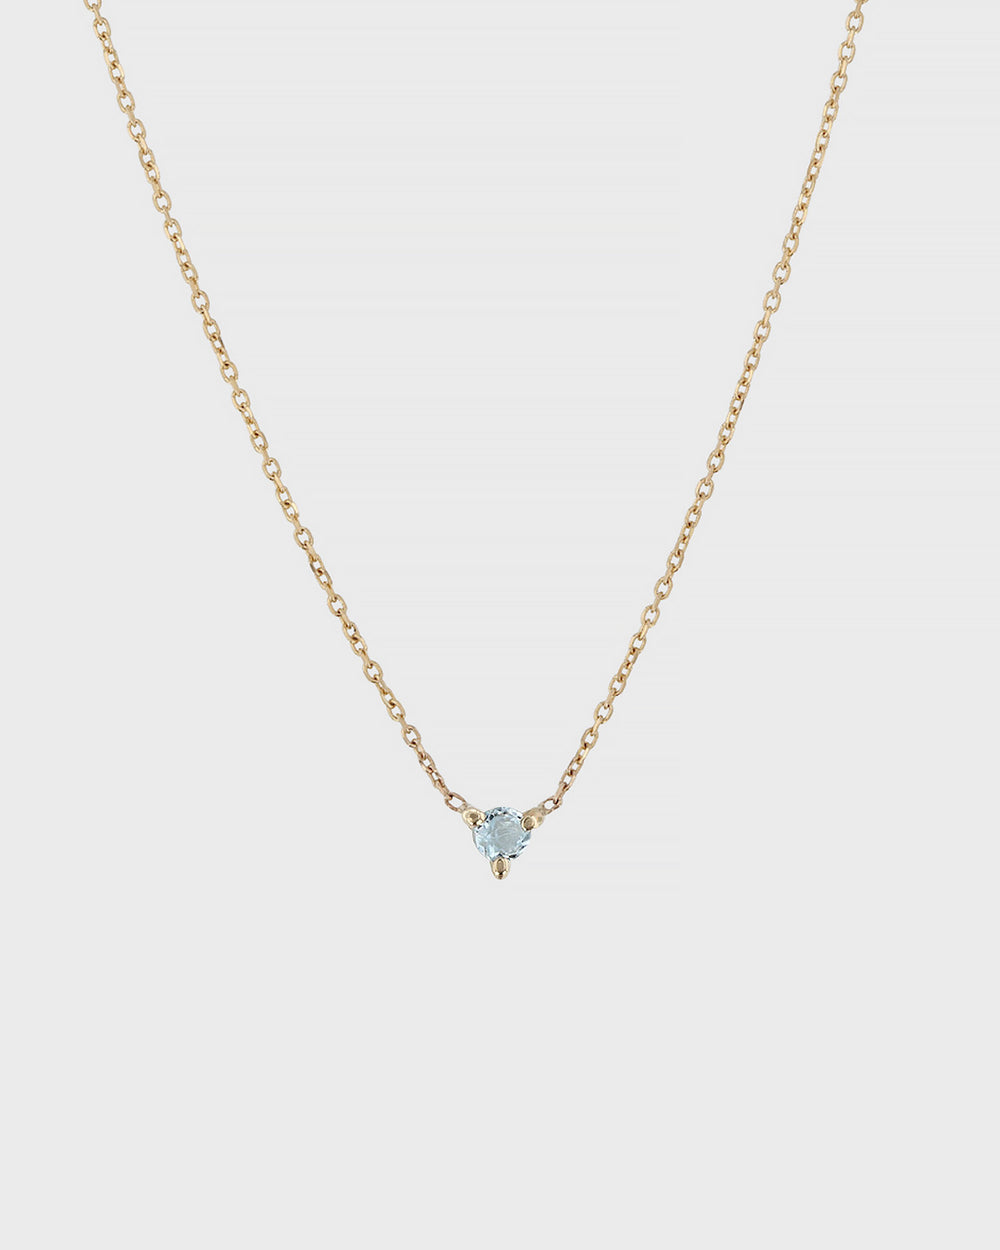 The Petite Aquamarine Birthstone Necklace by Sarah & Sebastian